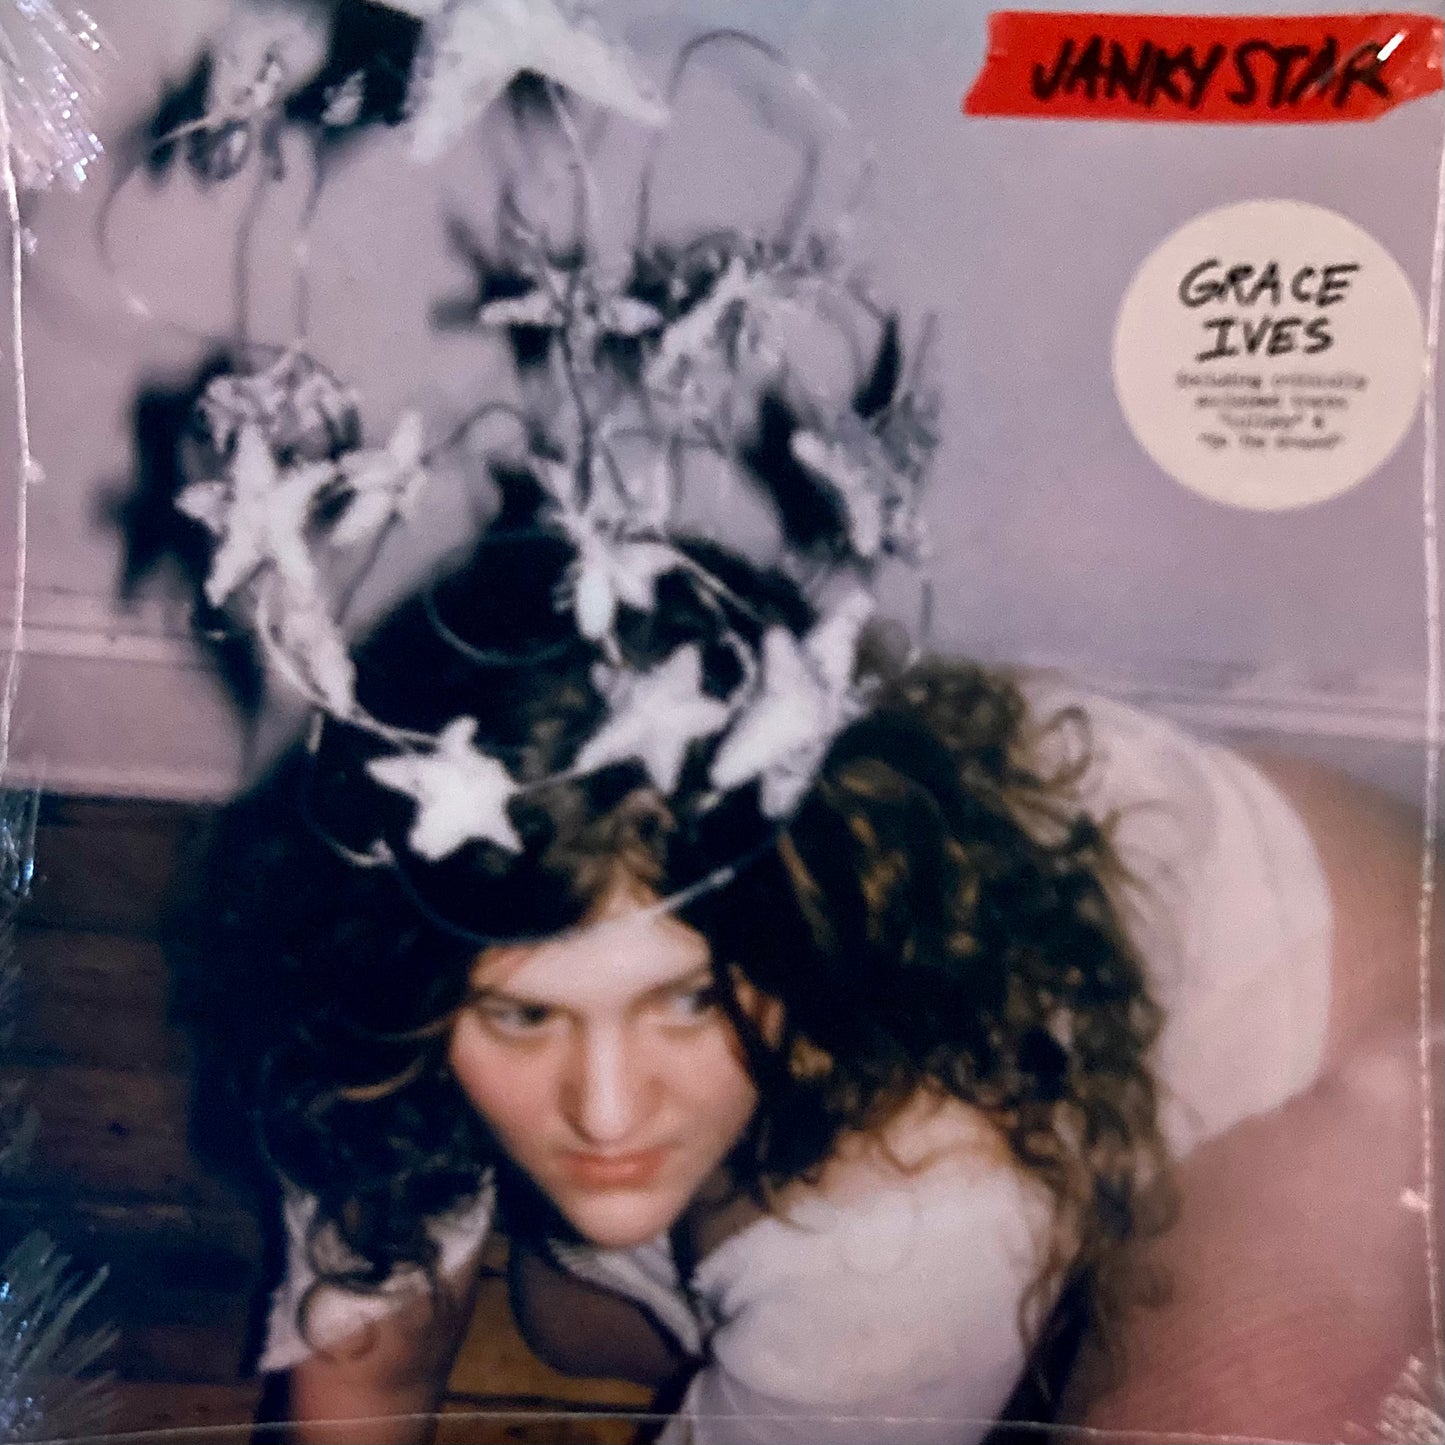 Grace Ives - Janky Star LP (Sealed)